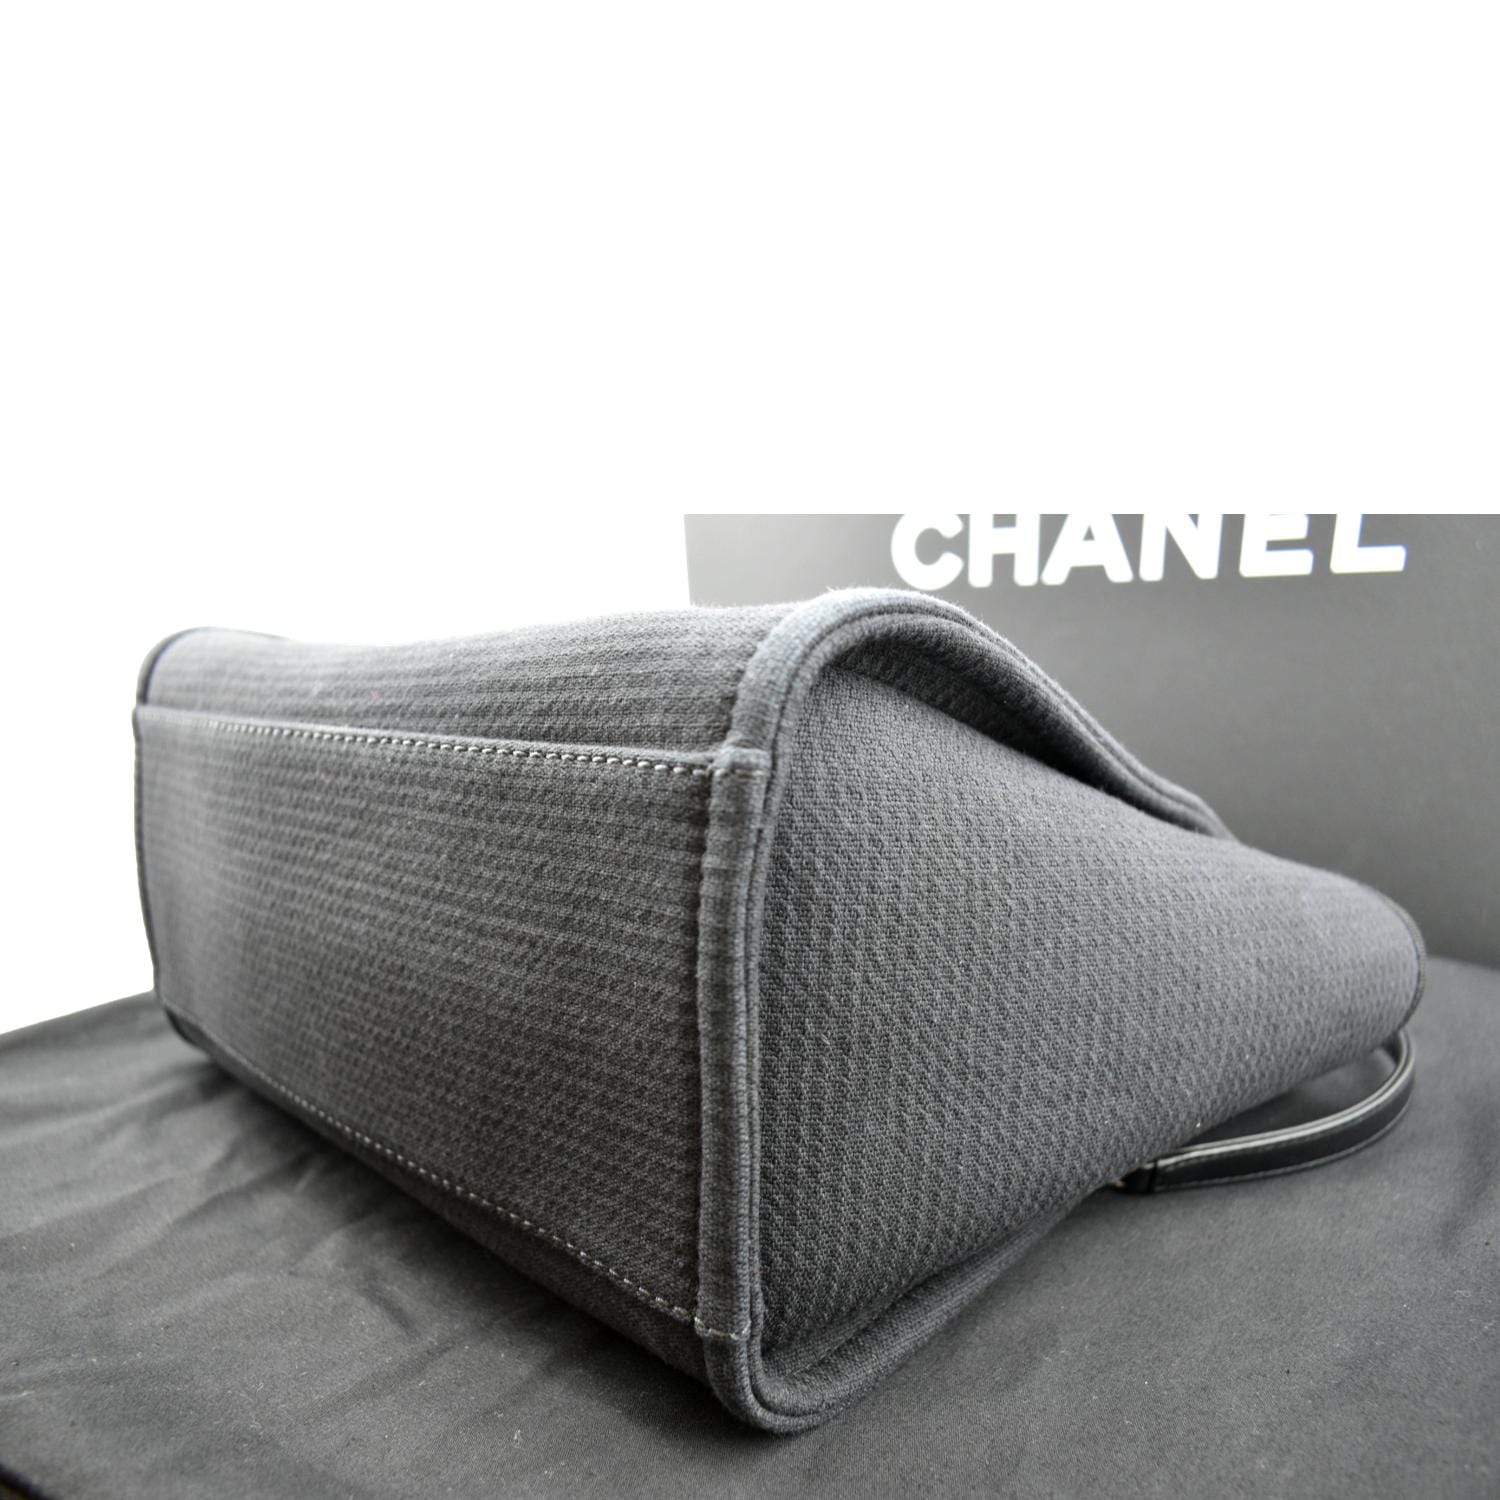 Chanel Small Deauville Shopping Bag - Grey Totes, Handbags